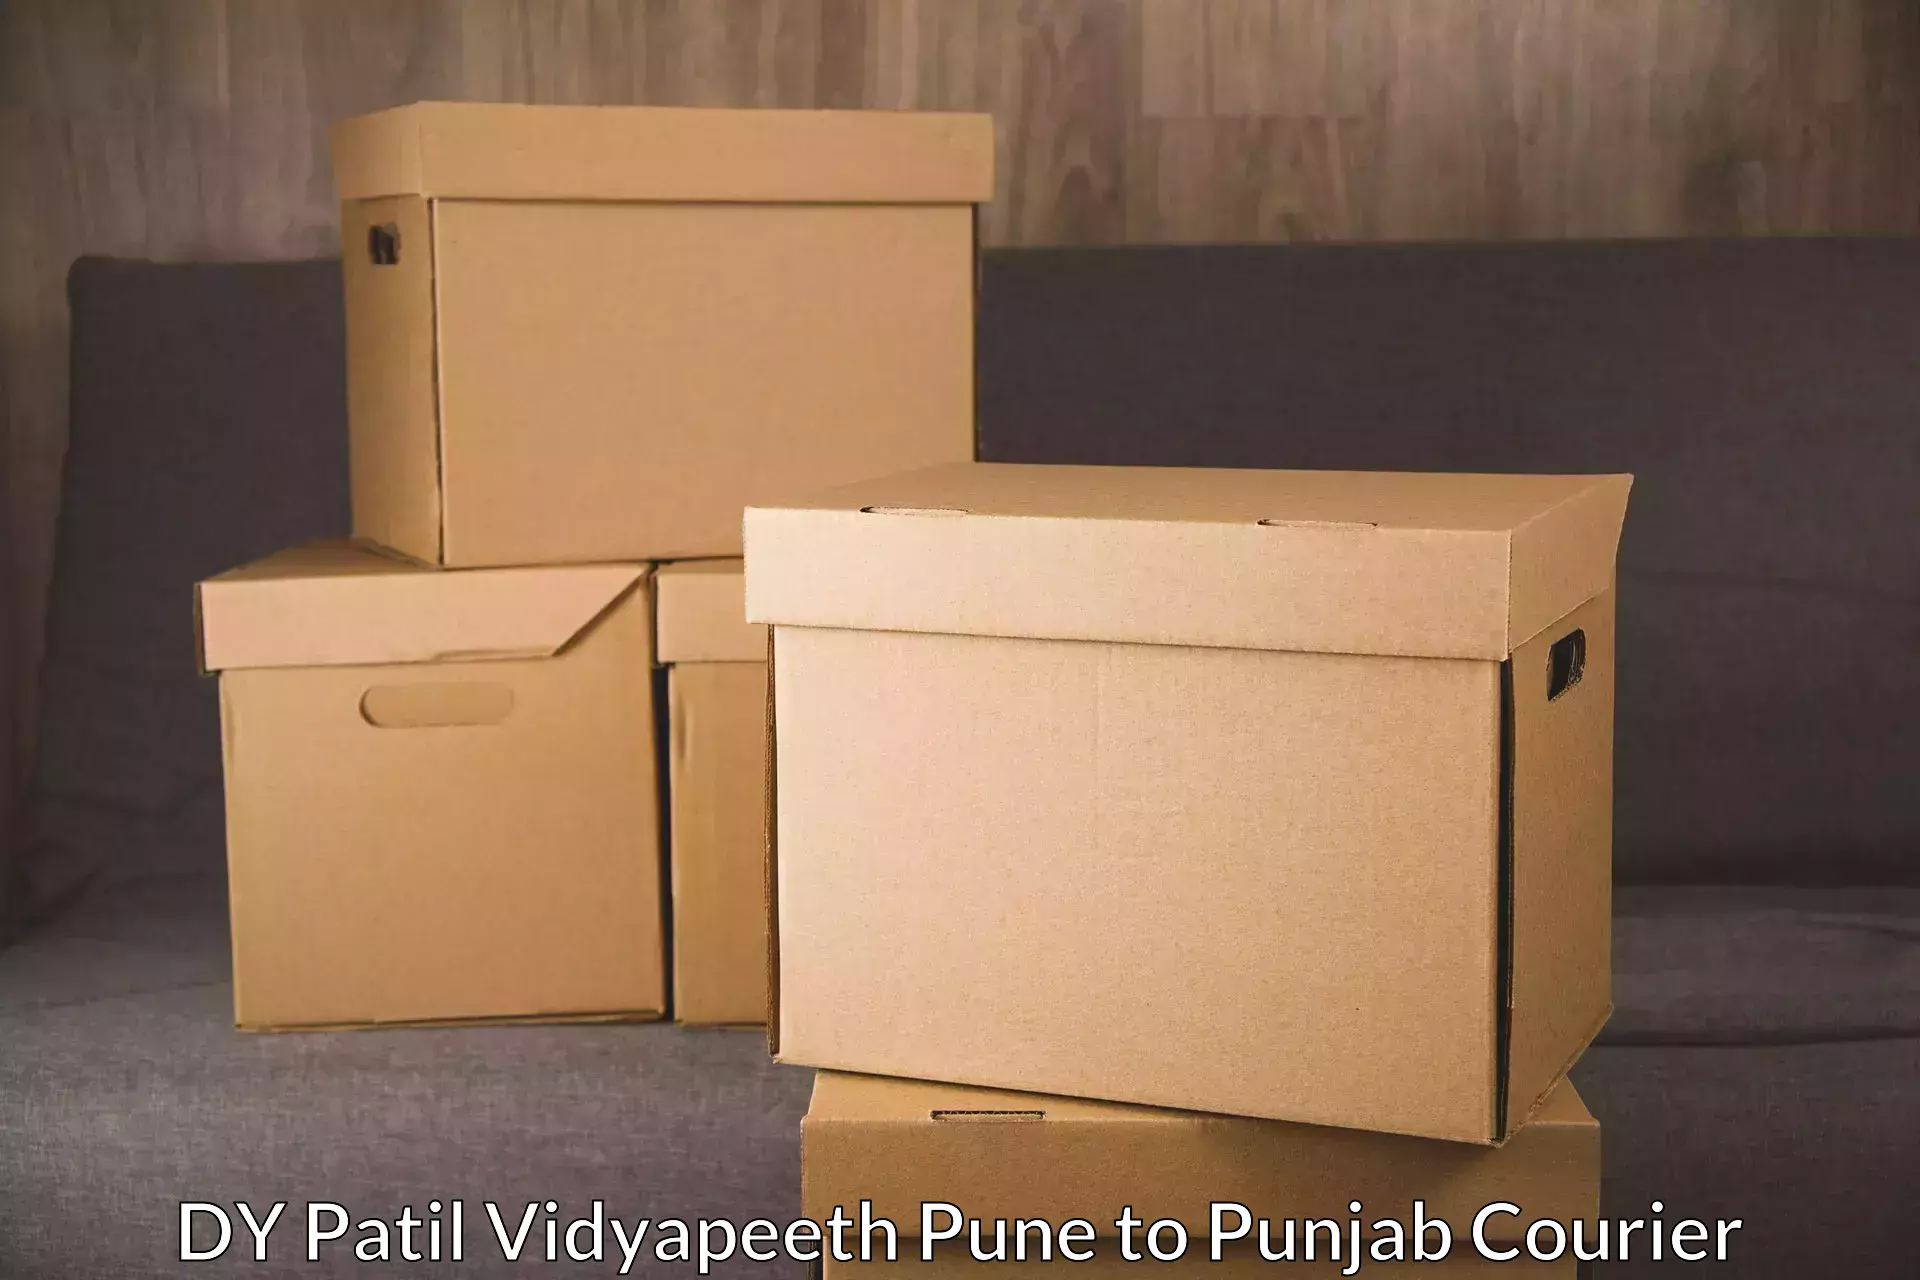 Express package handling DY Patil Vidyapeeth Pune to Rupnagar